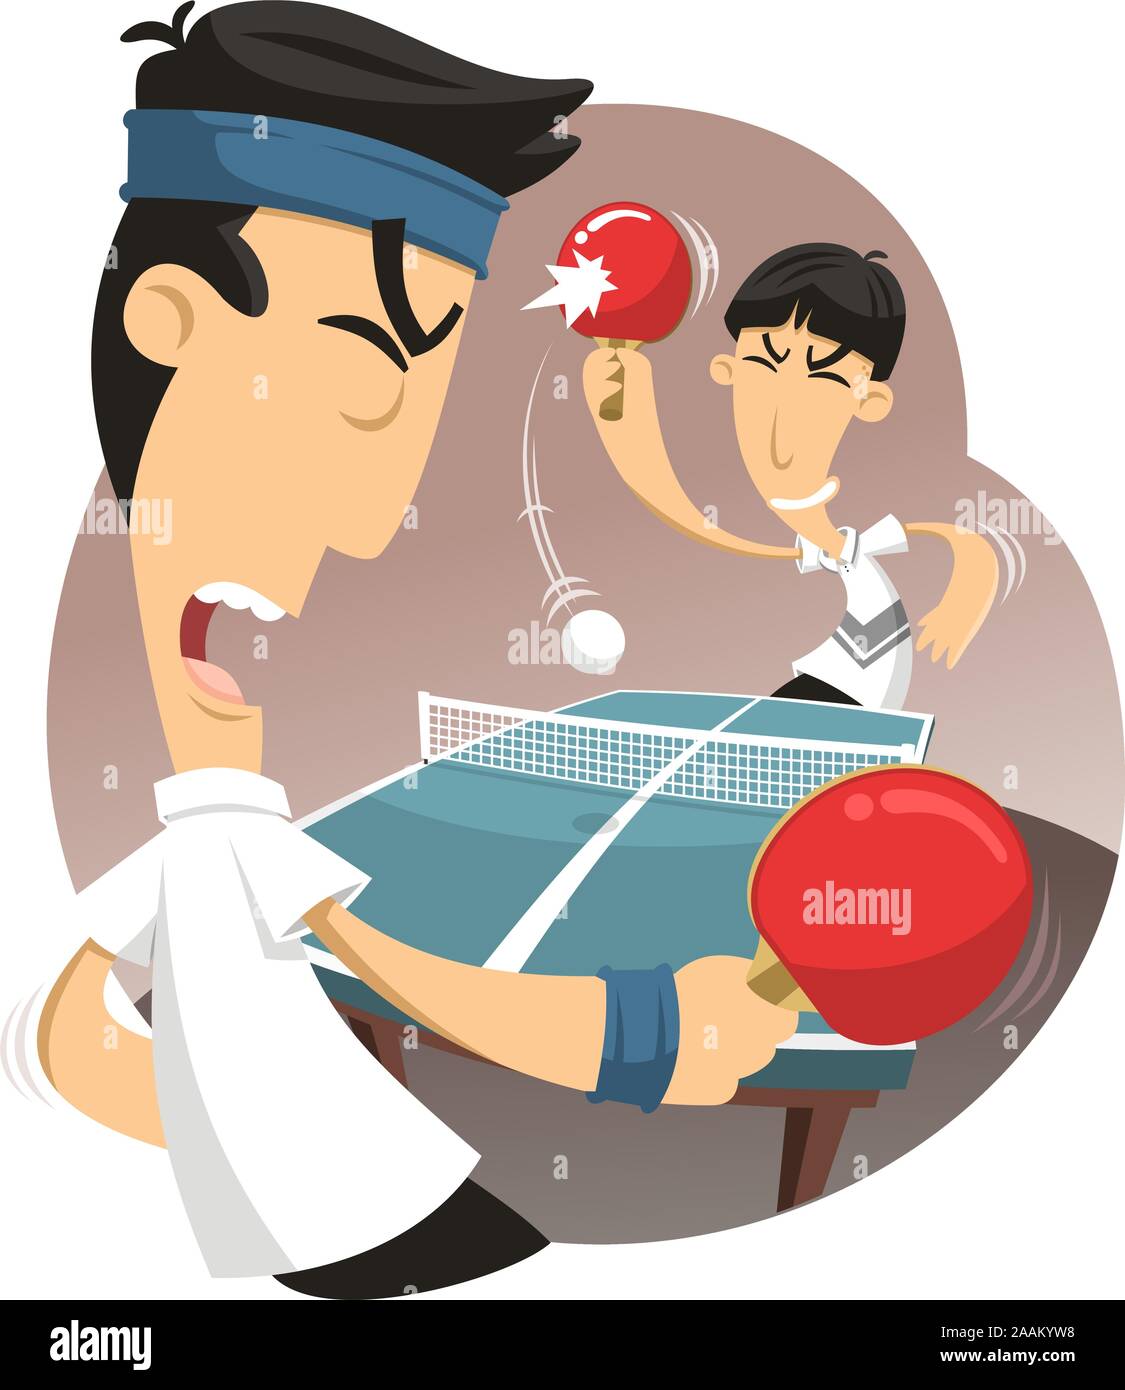 Ping pong match vector cartoon illustration Stock Vector